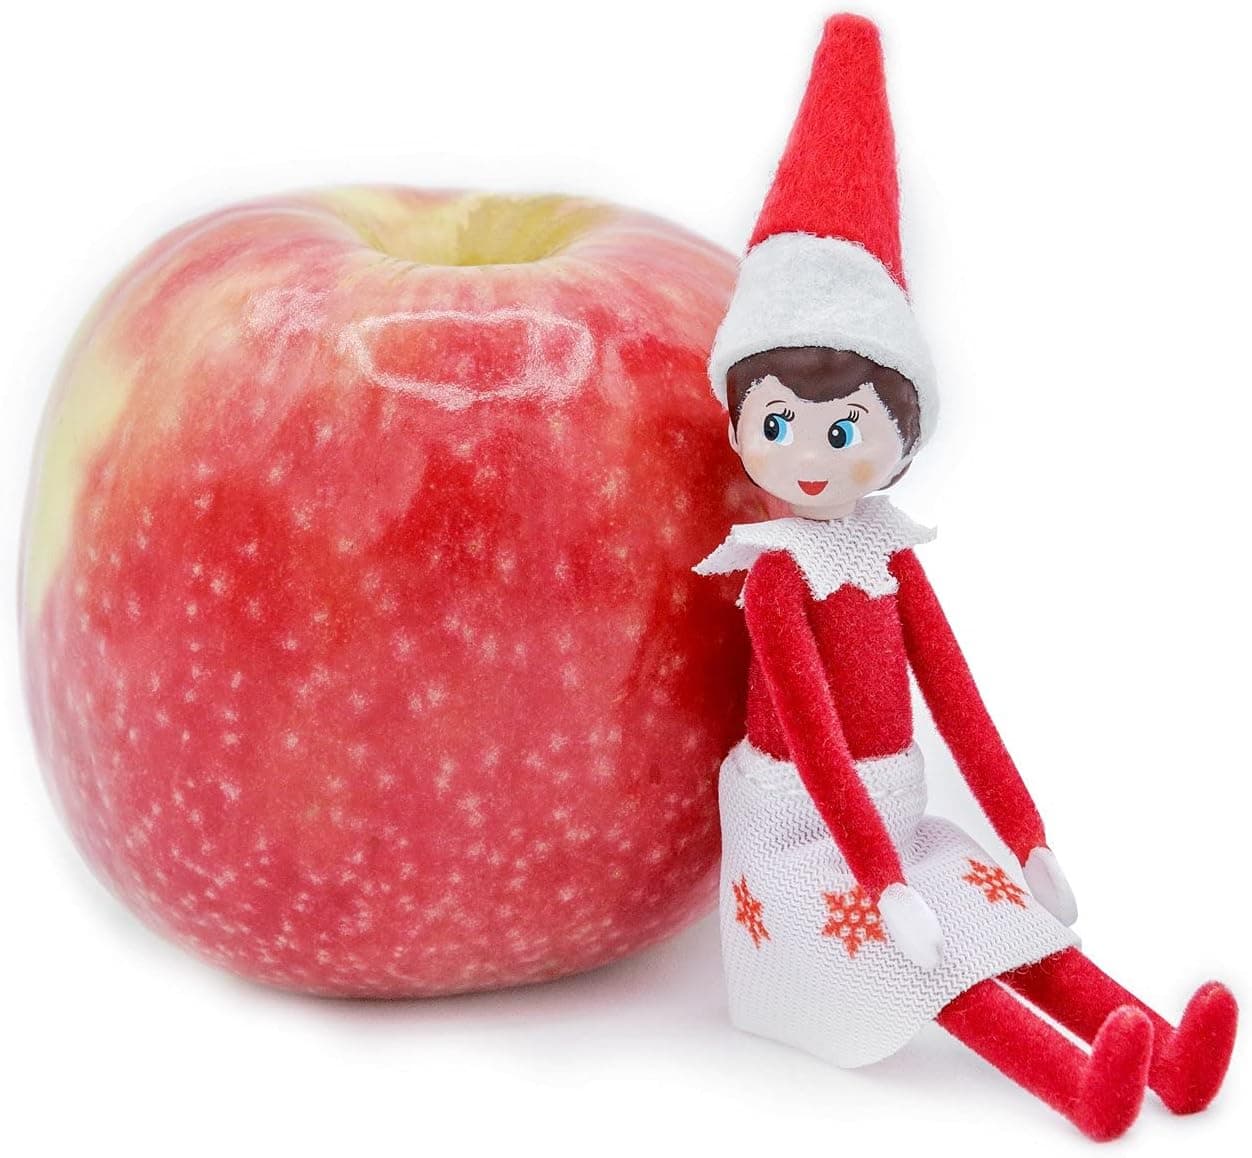 Fille peau foncée - lutine farceuse de Noël - Elf on the shelf for Christmas